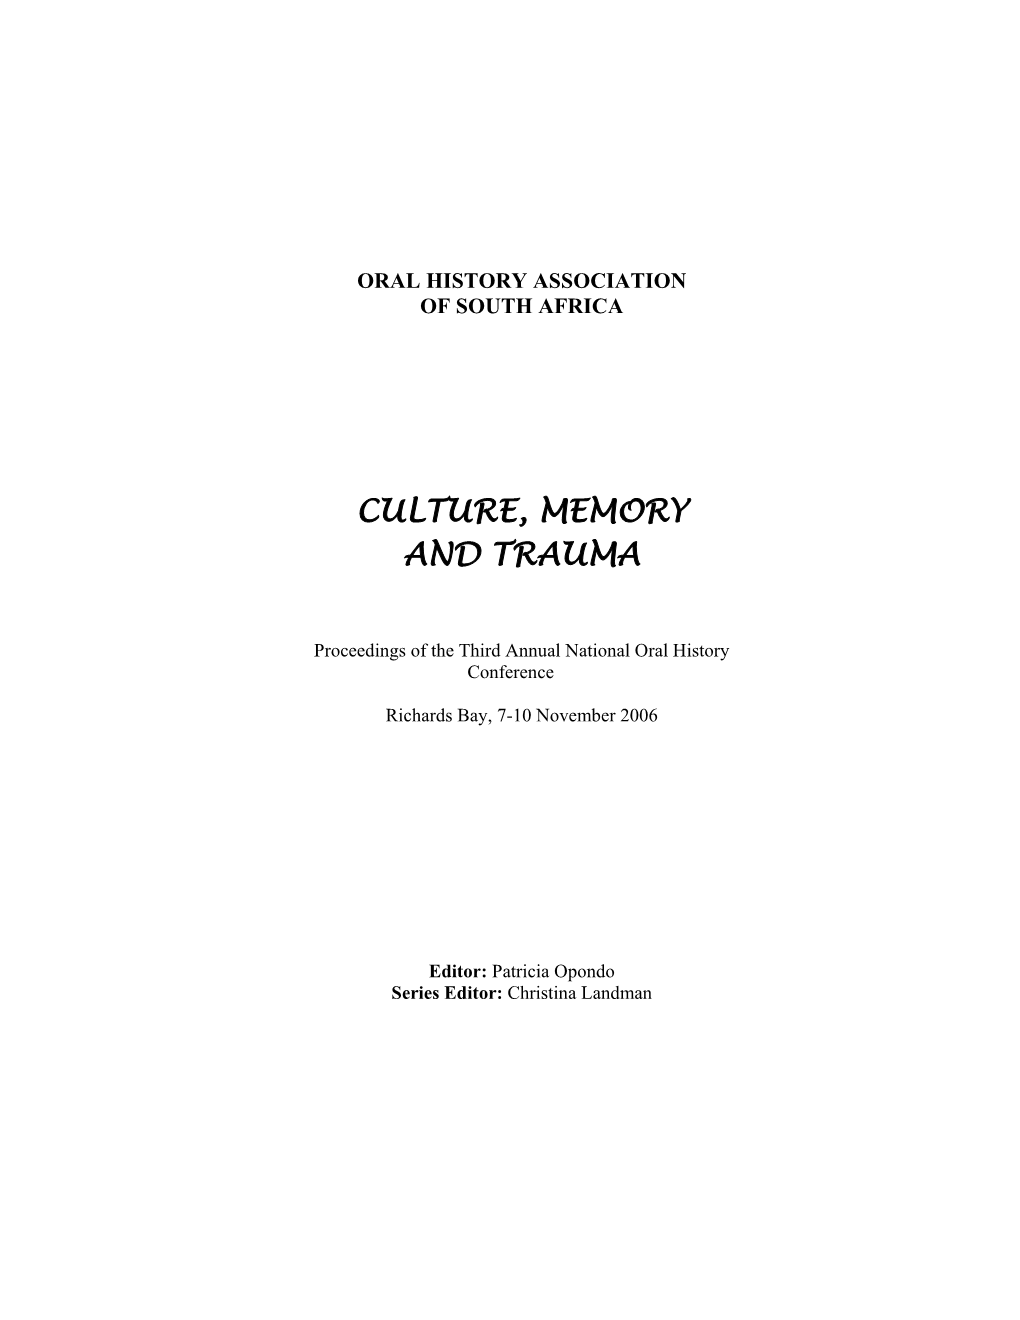 Culture, Memory and Trauma